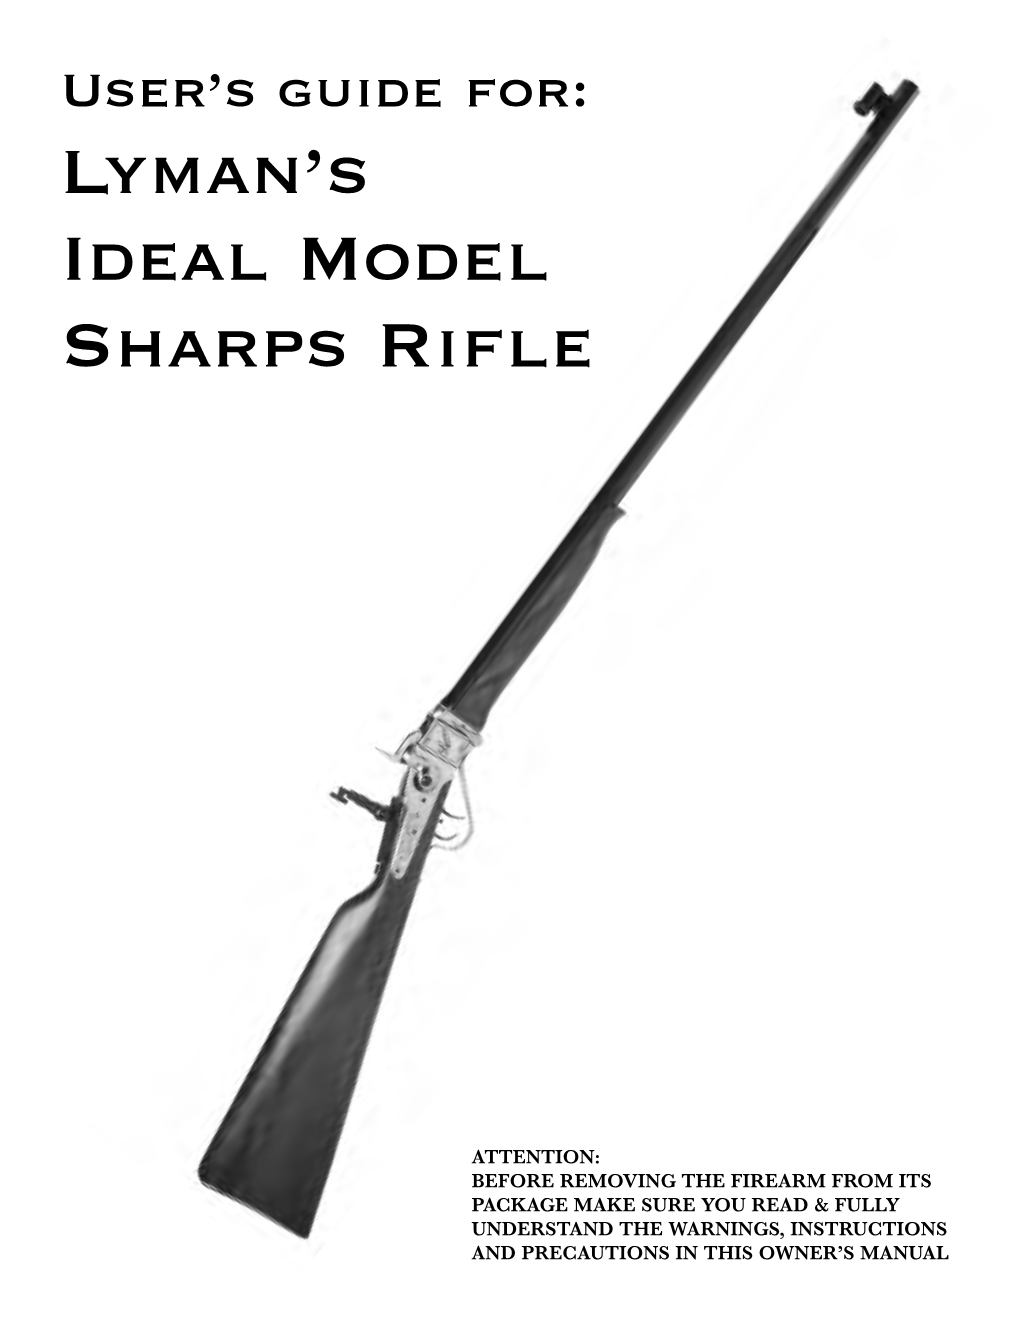 Lyman's Ideal Model Sharps Rifle